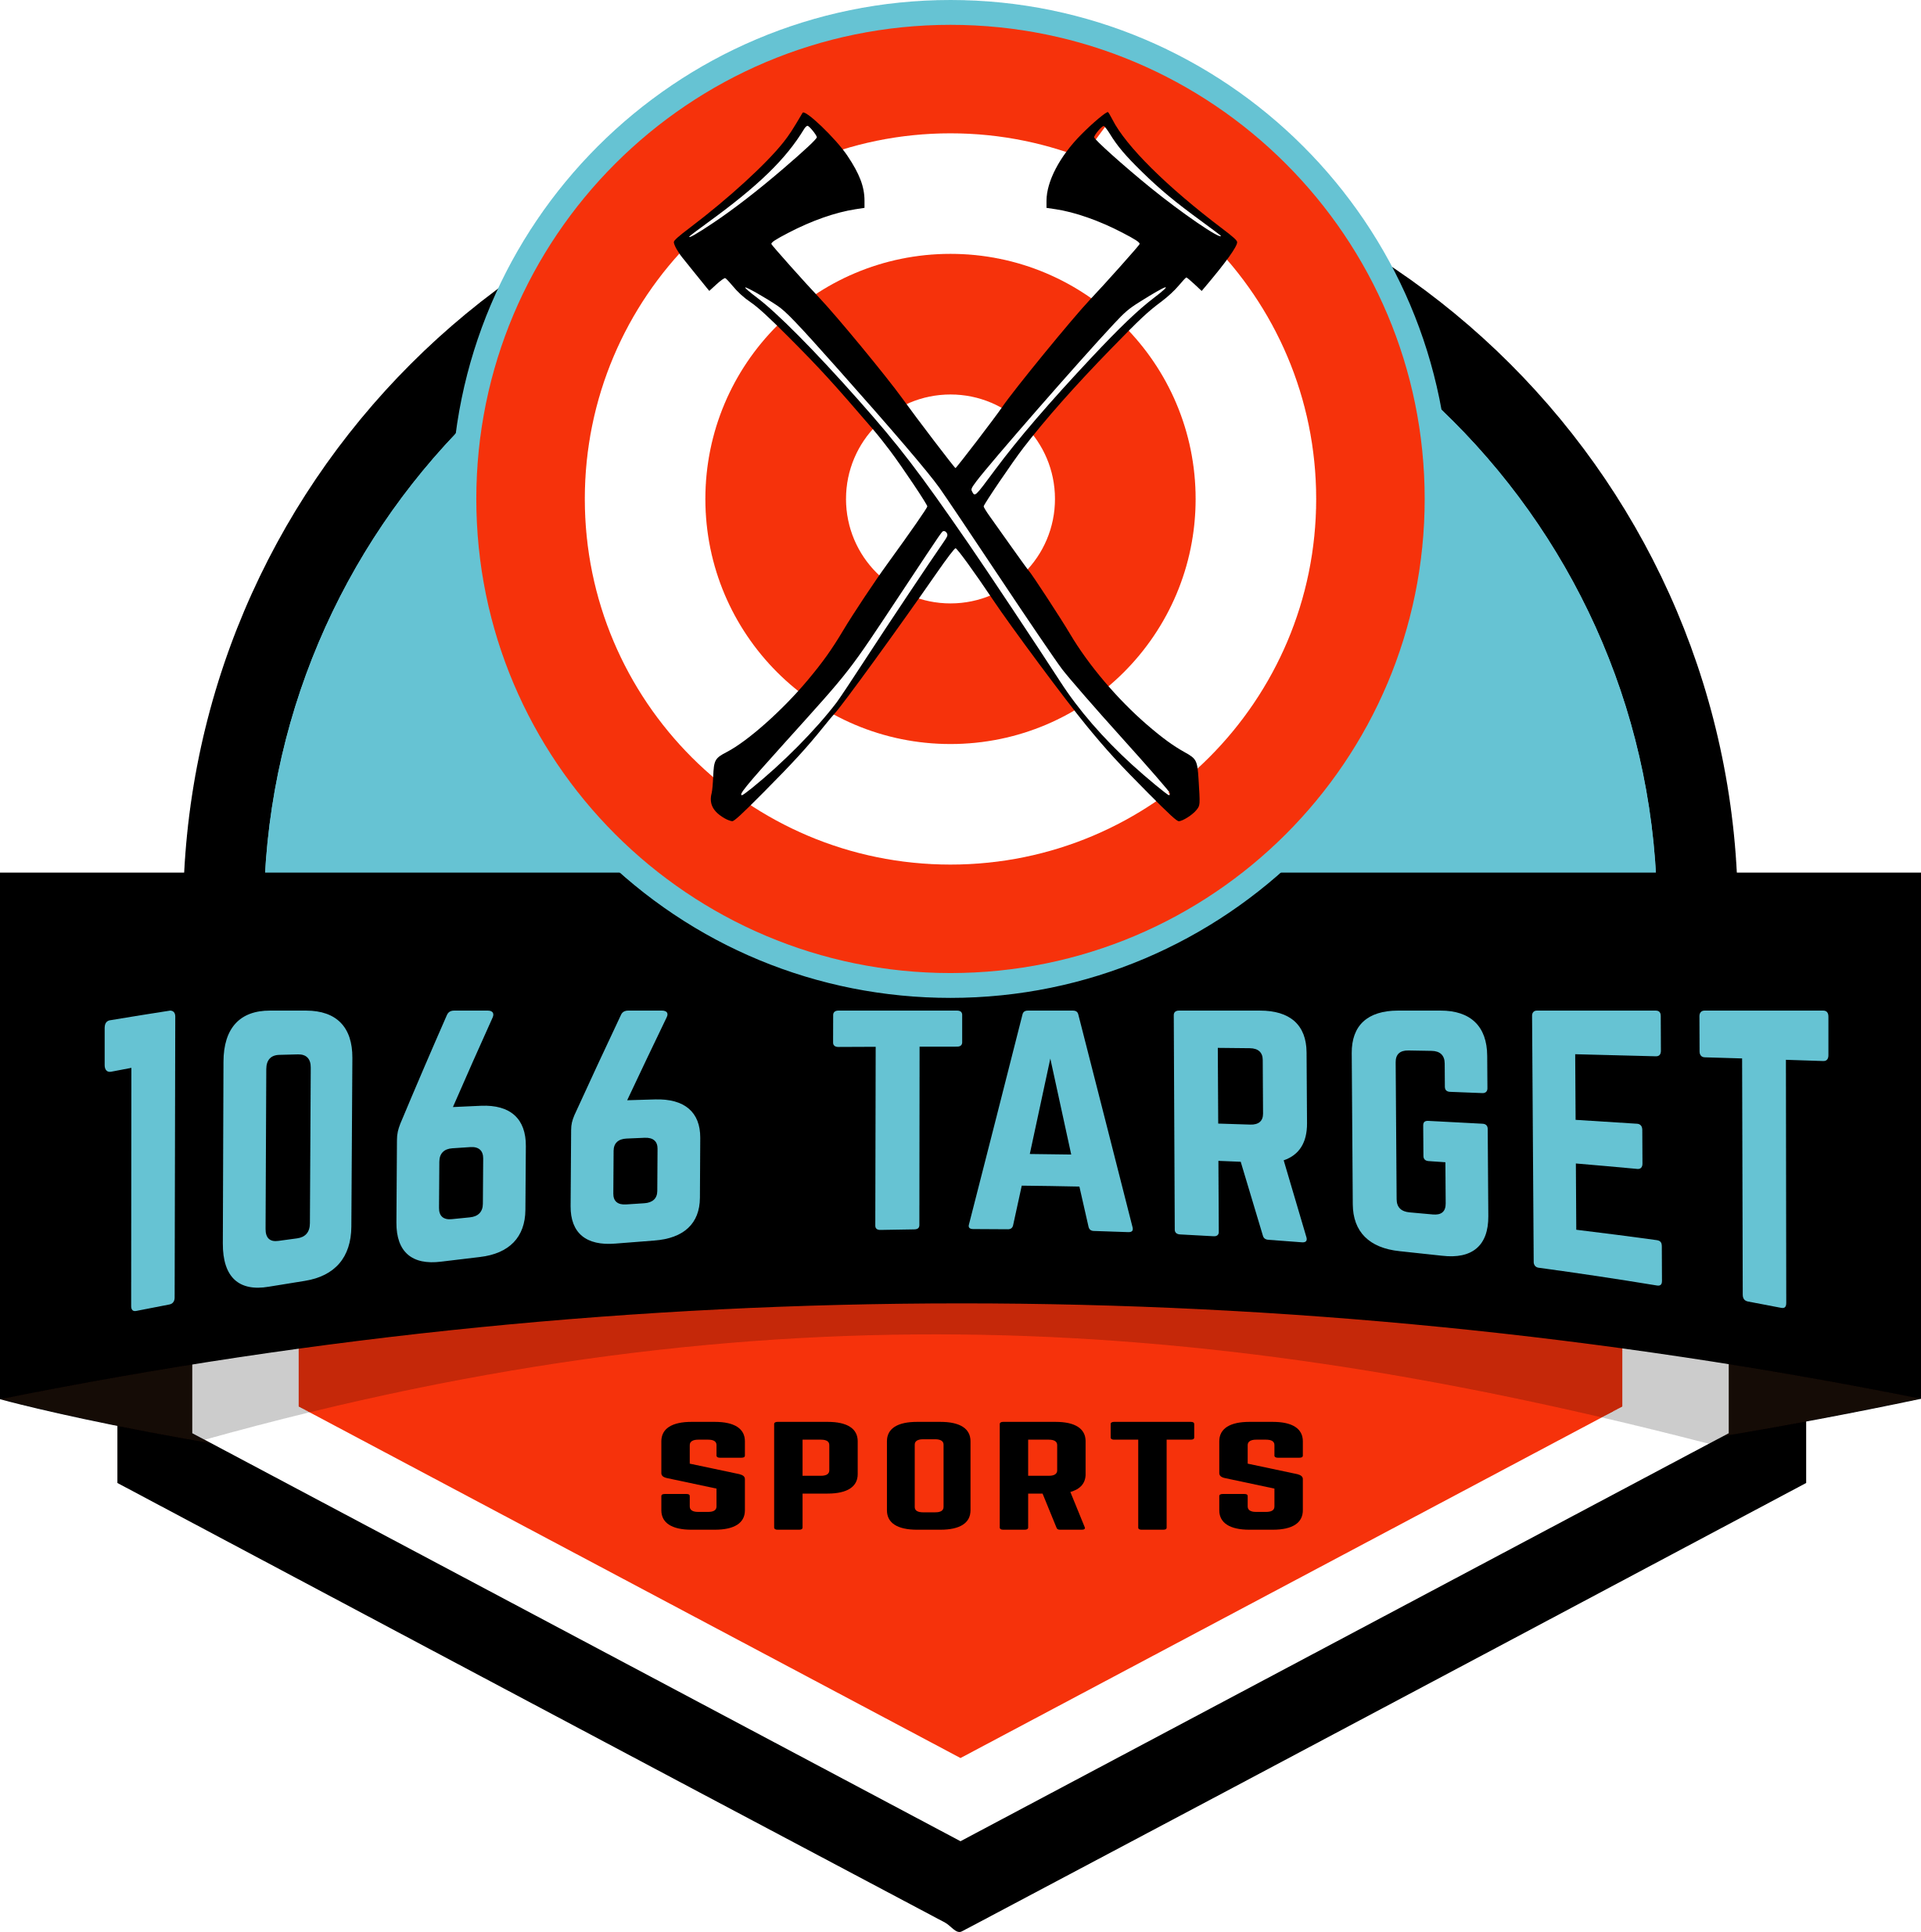 1066 Target sports